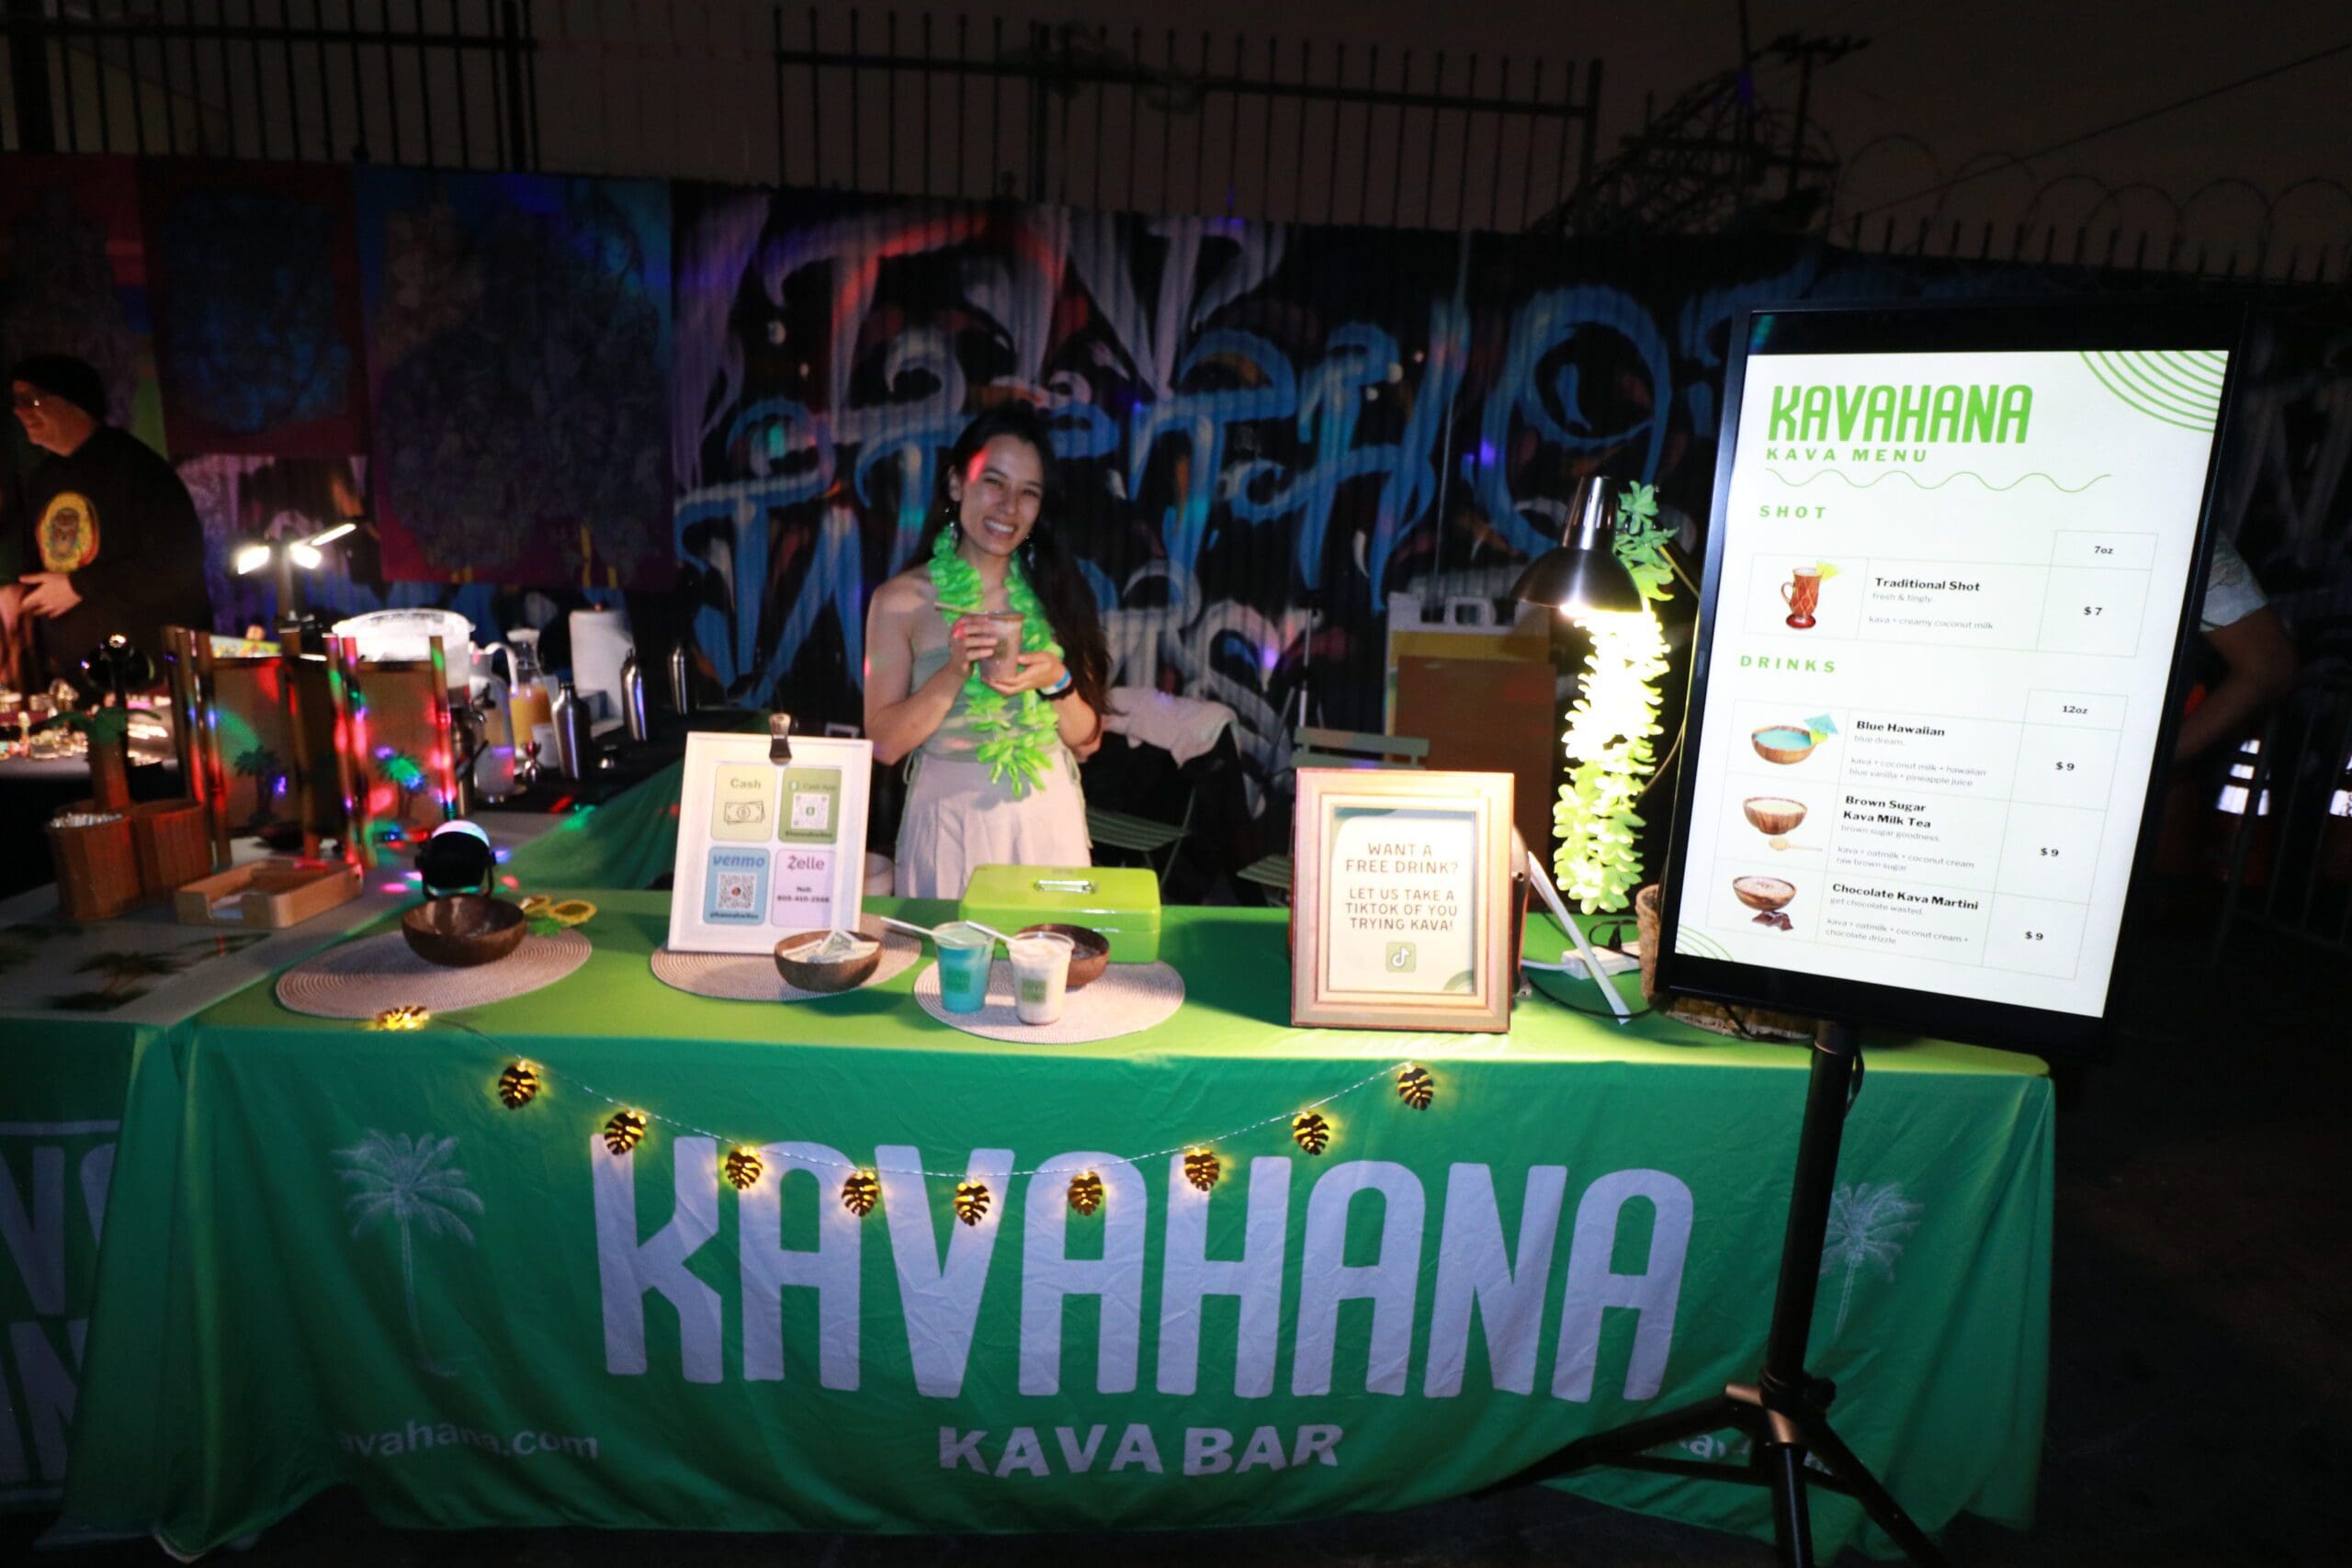 Kavahana at a rave in Los Angeles